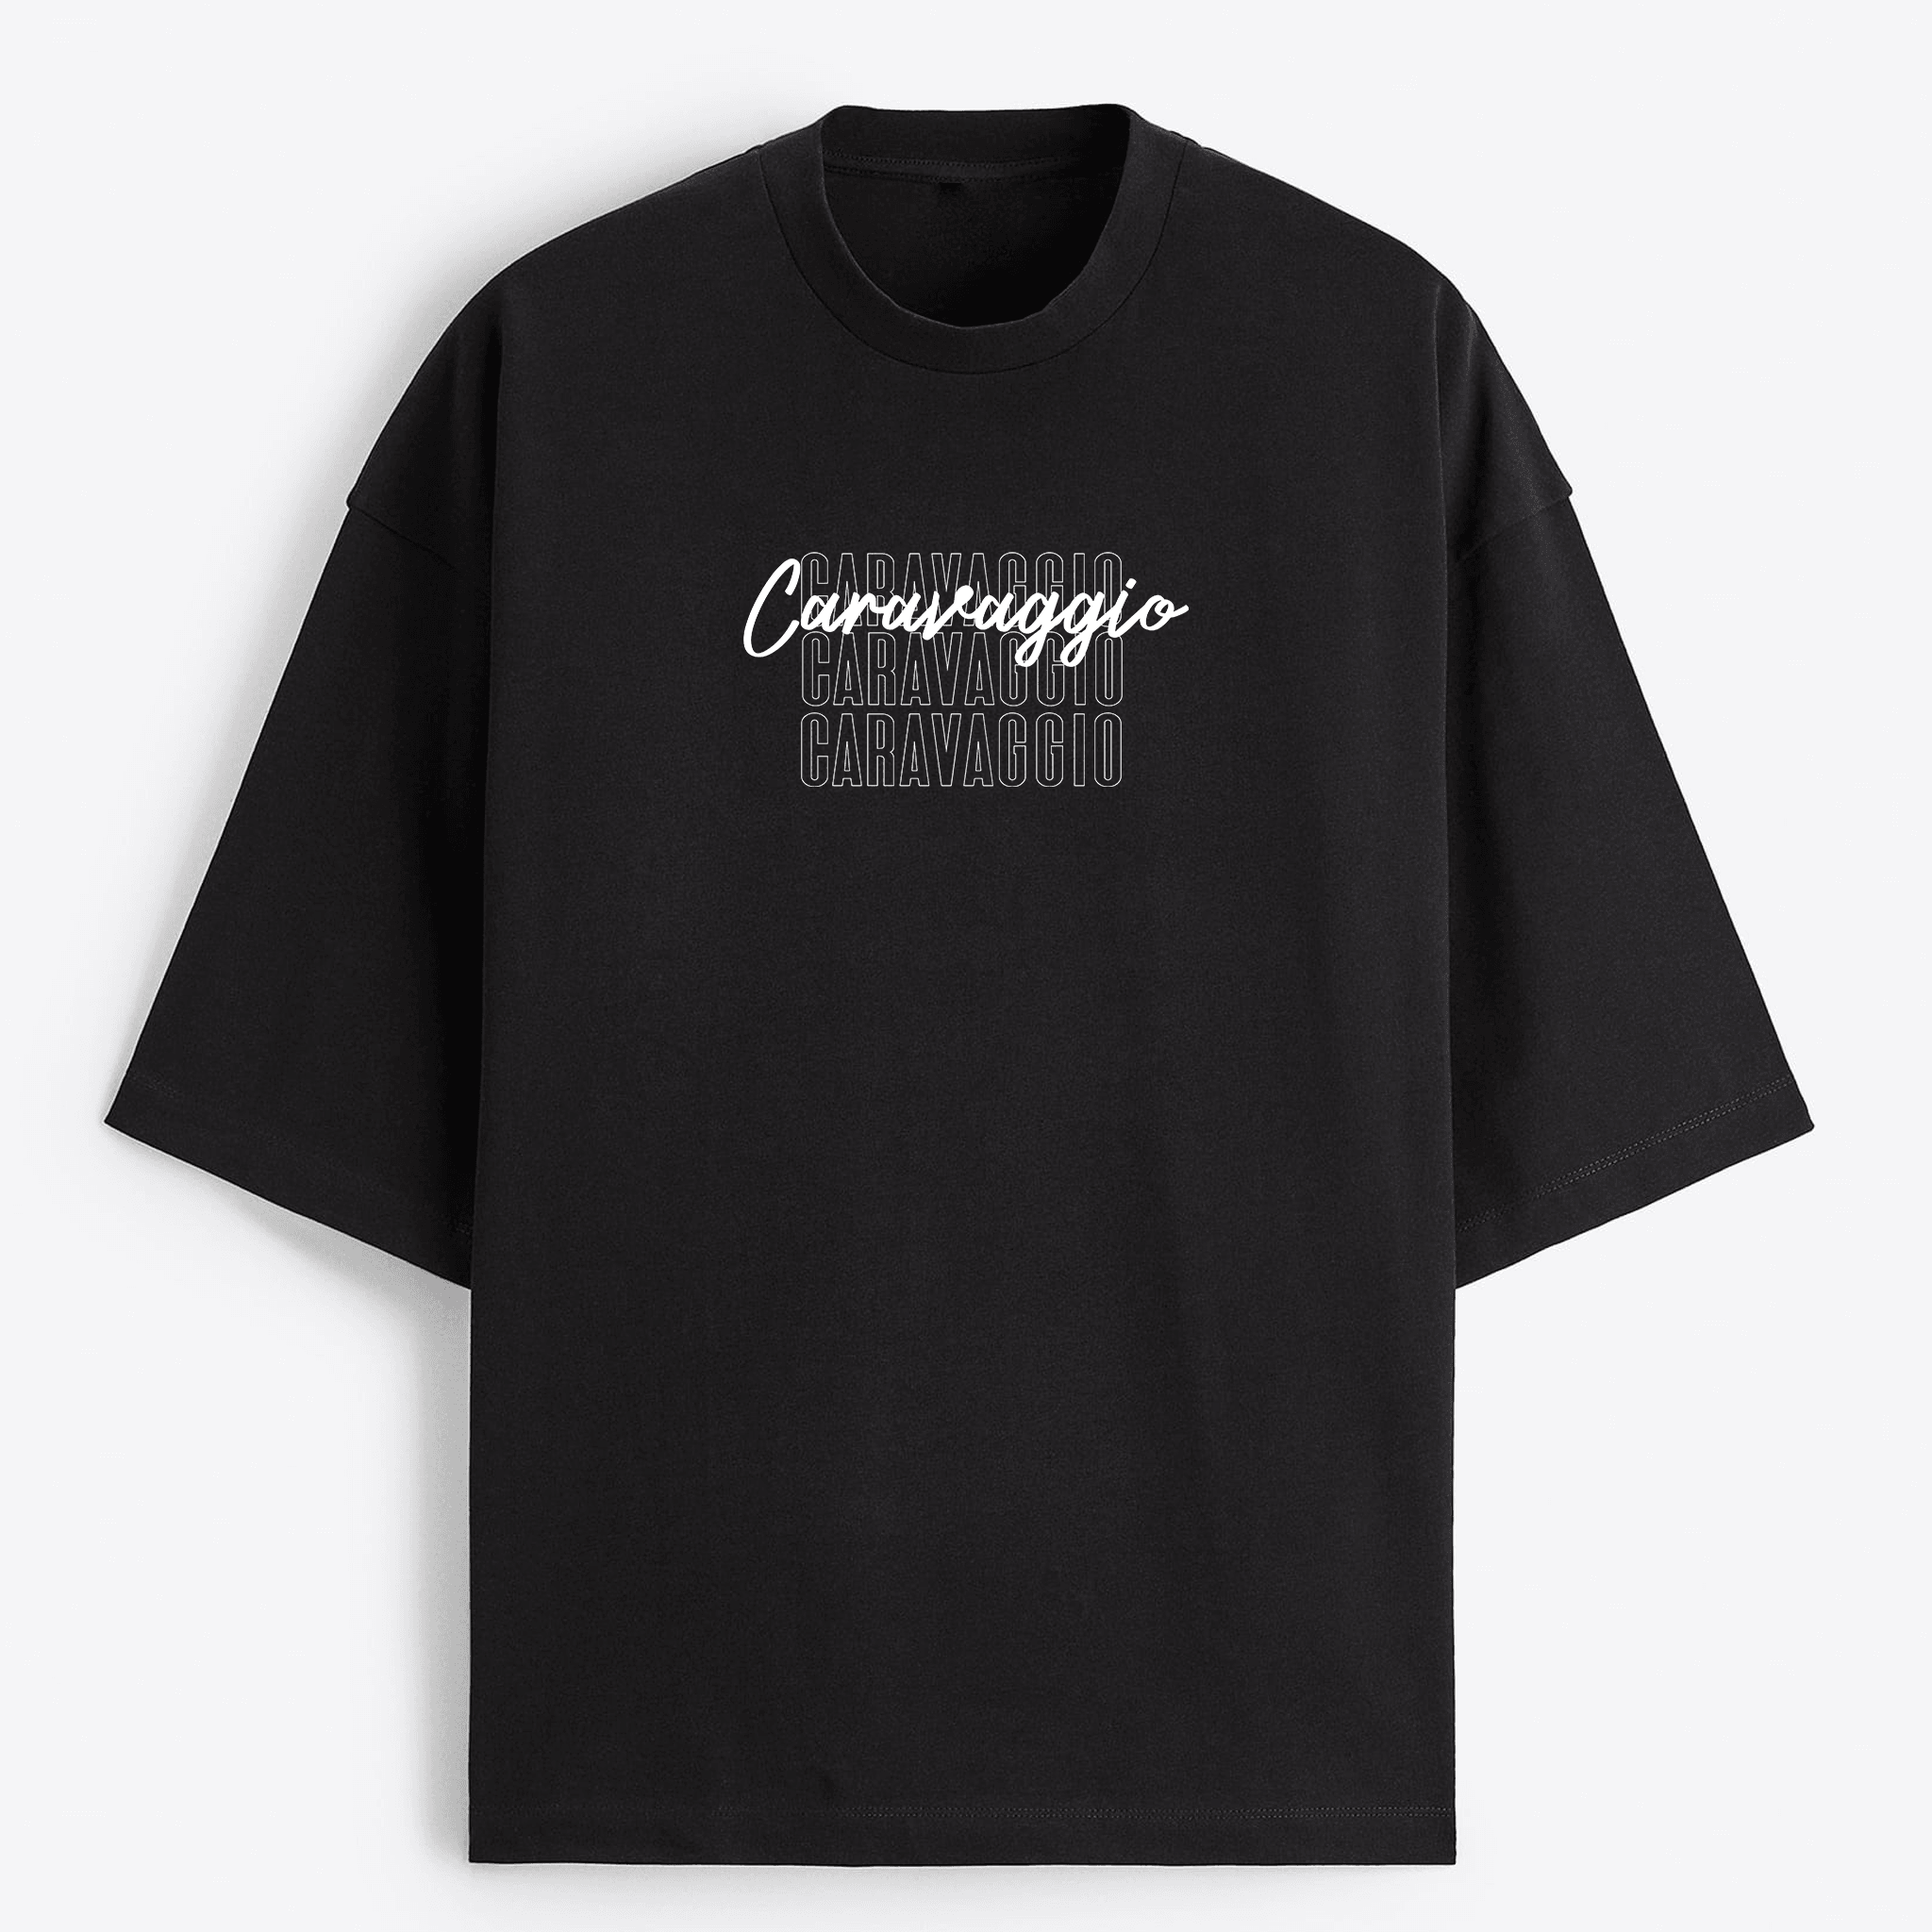 caravaggio oversize t-shirt